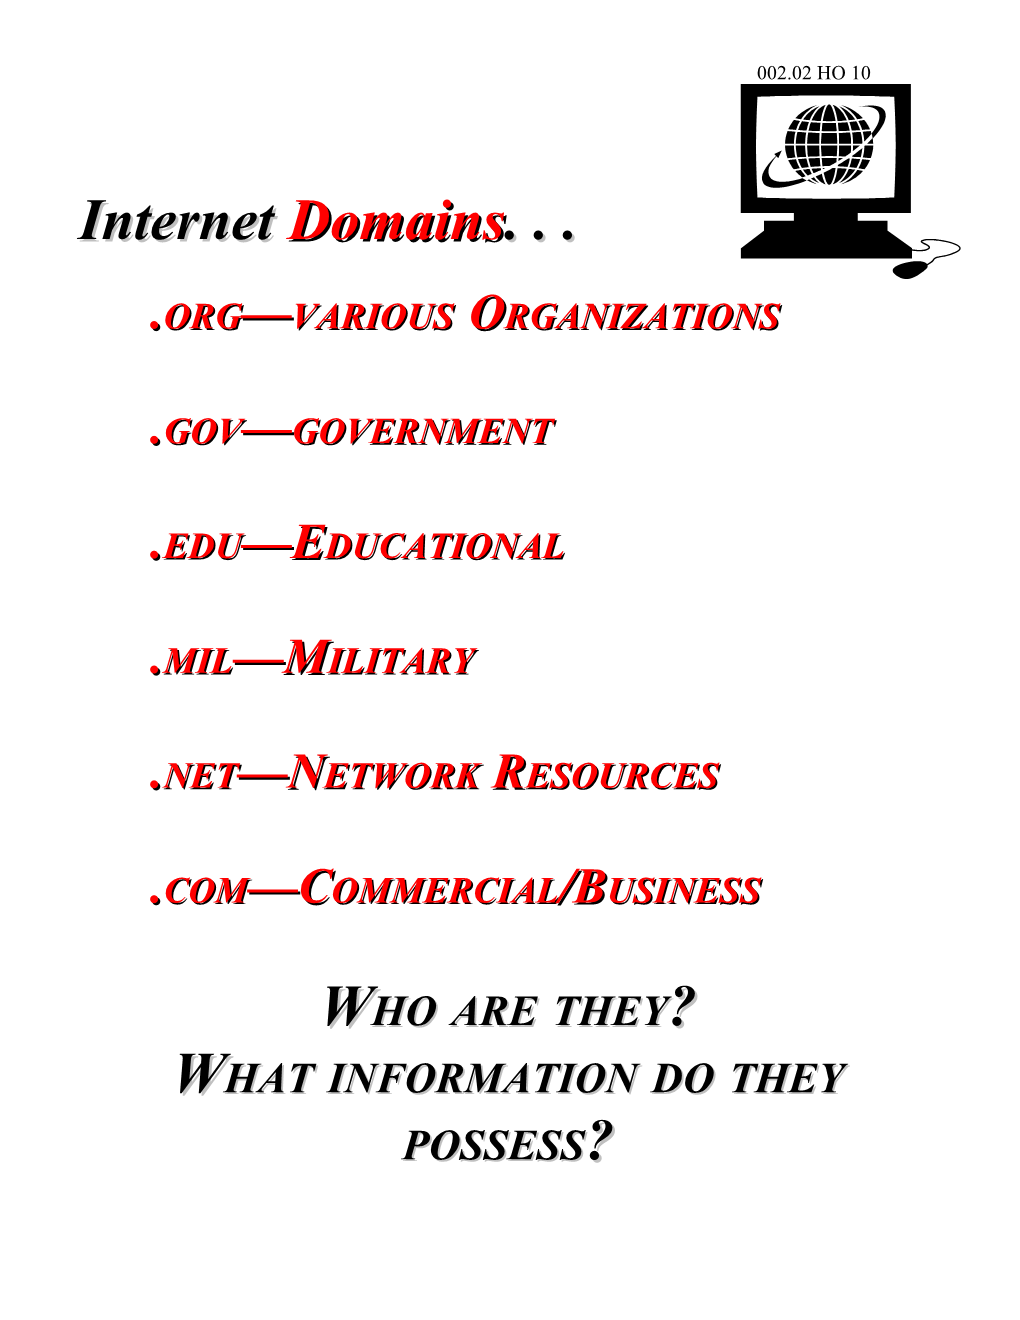 Org Various Organizations